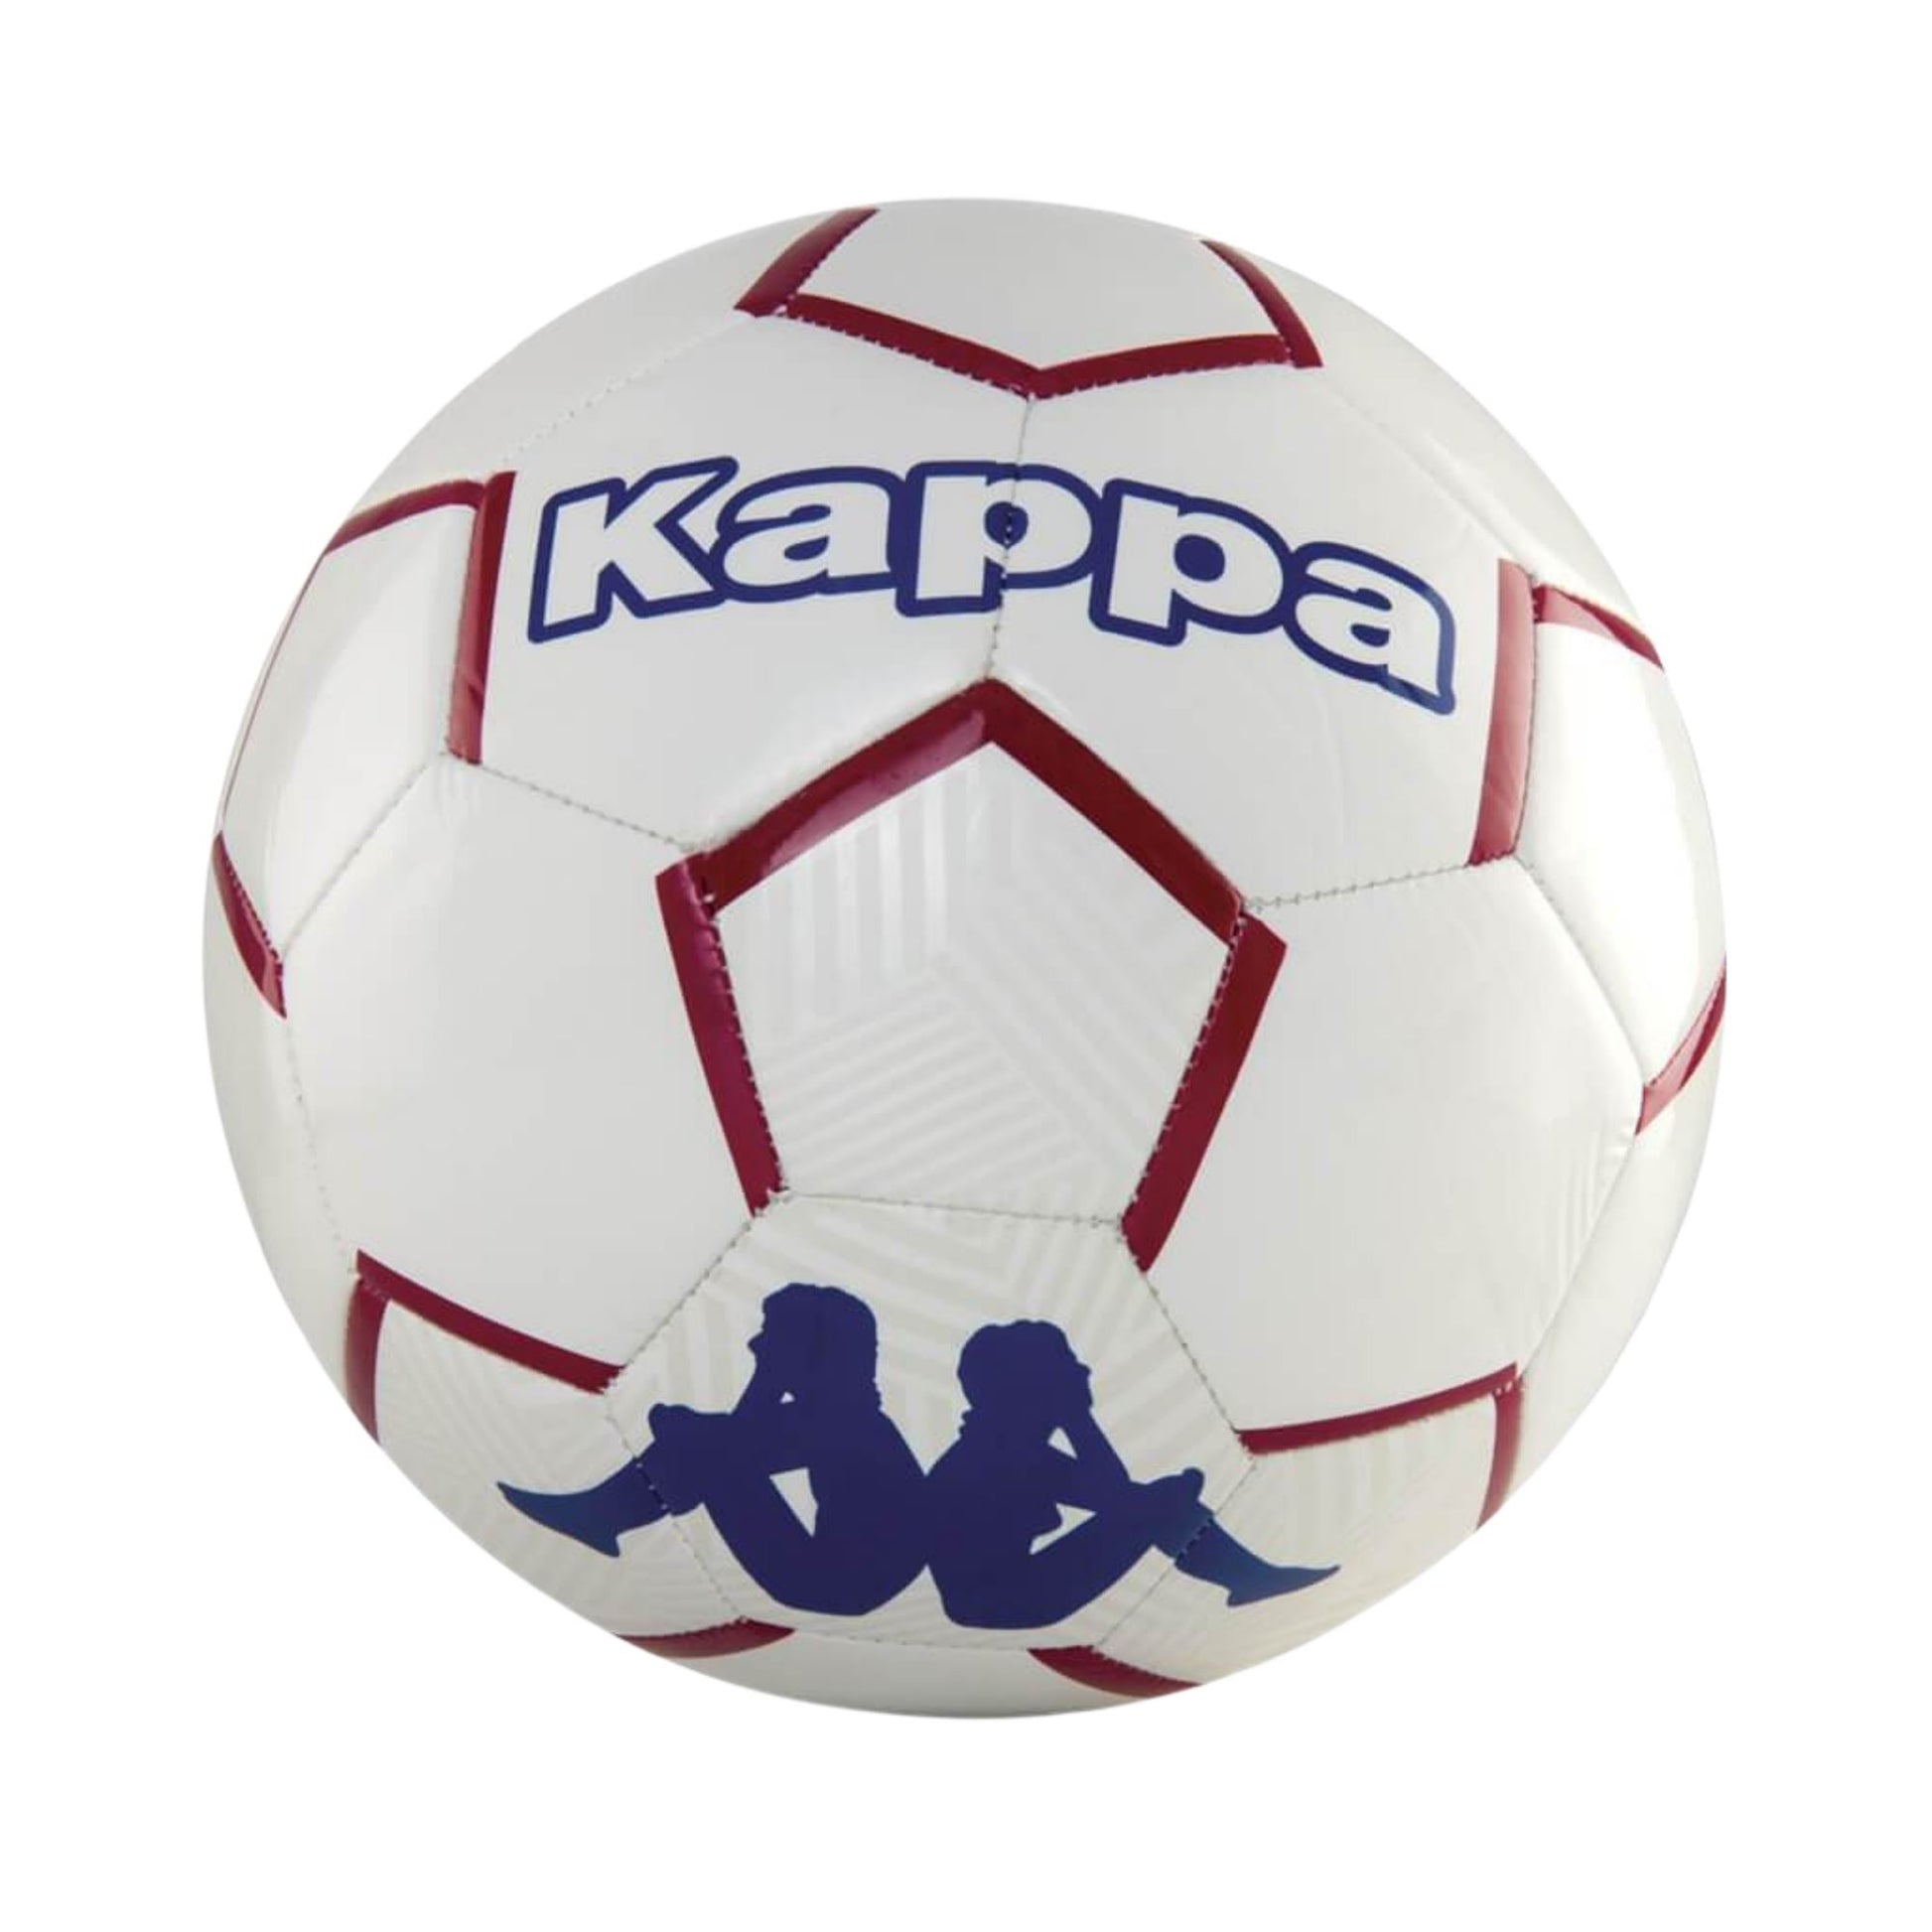 KAPPA SOCCER BALL SIZE 5 Kappa 